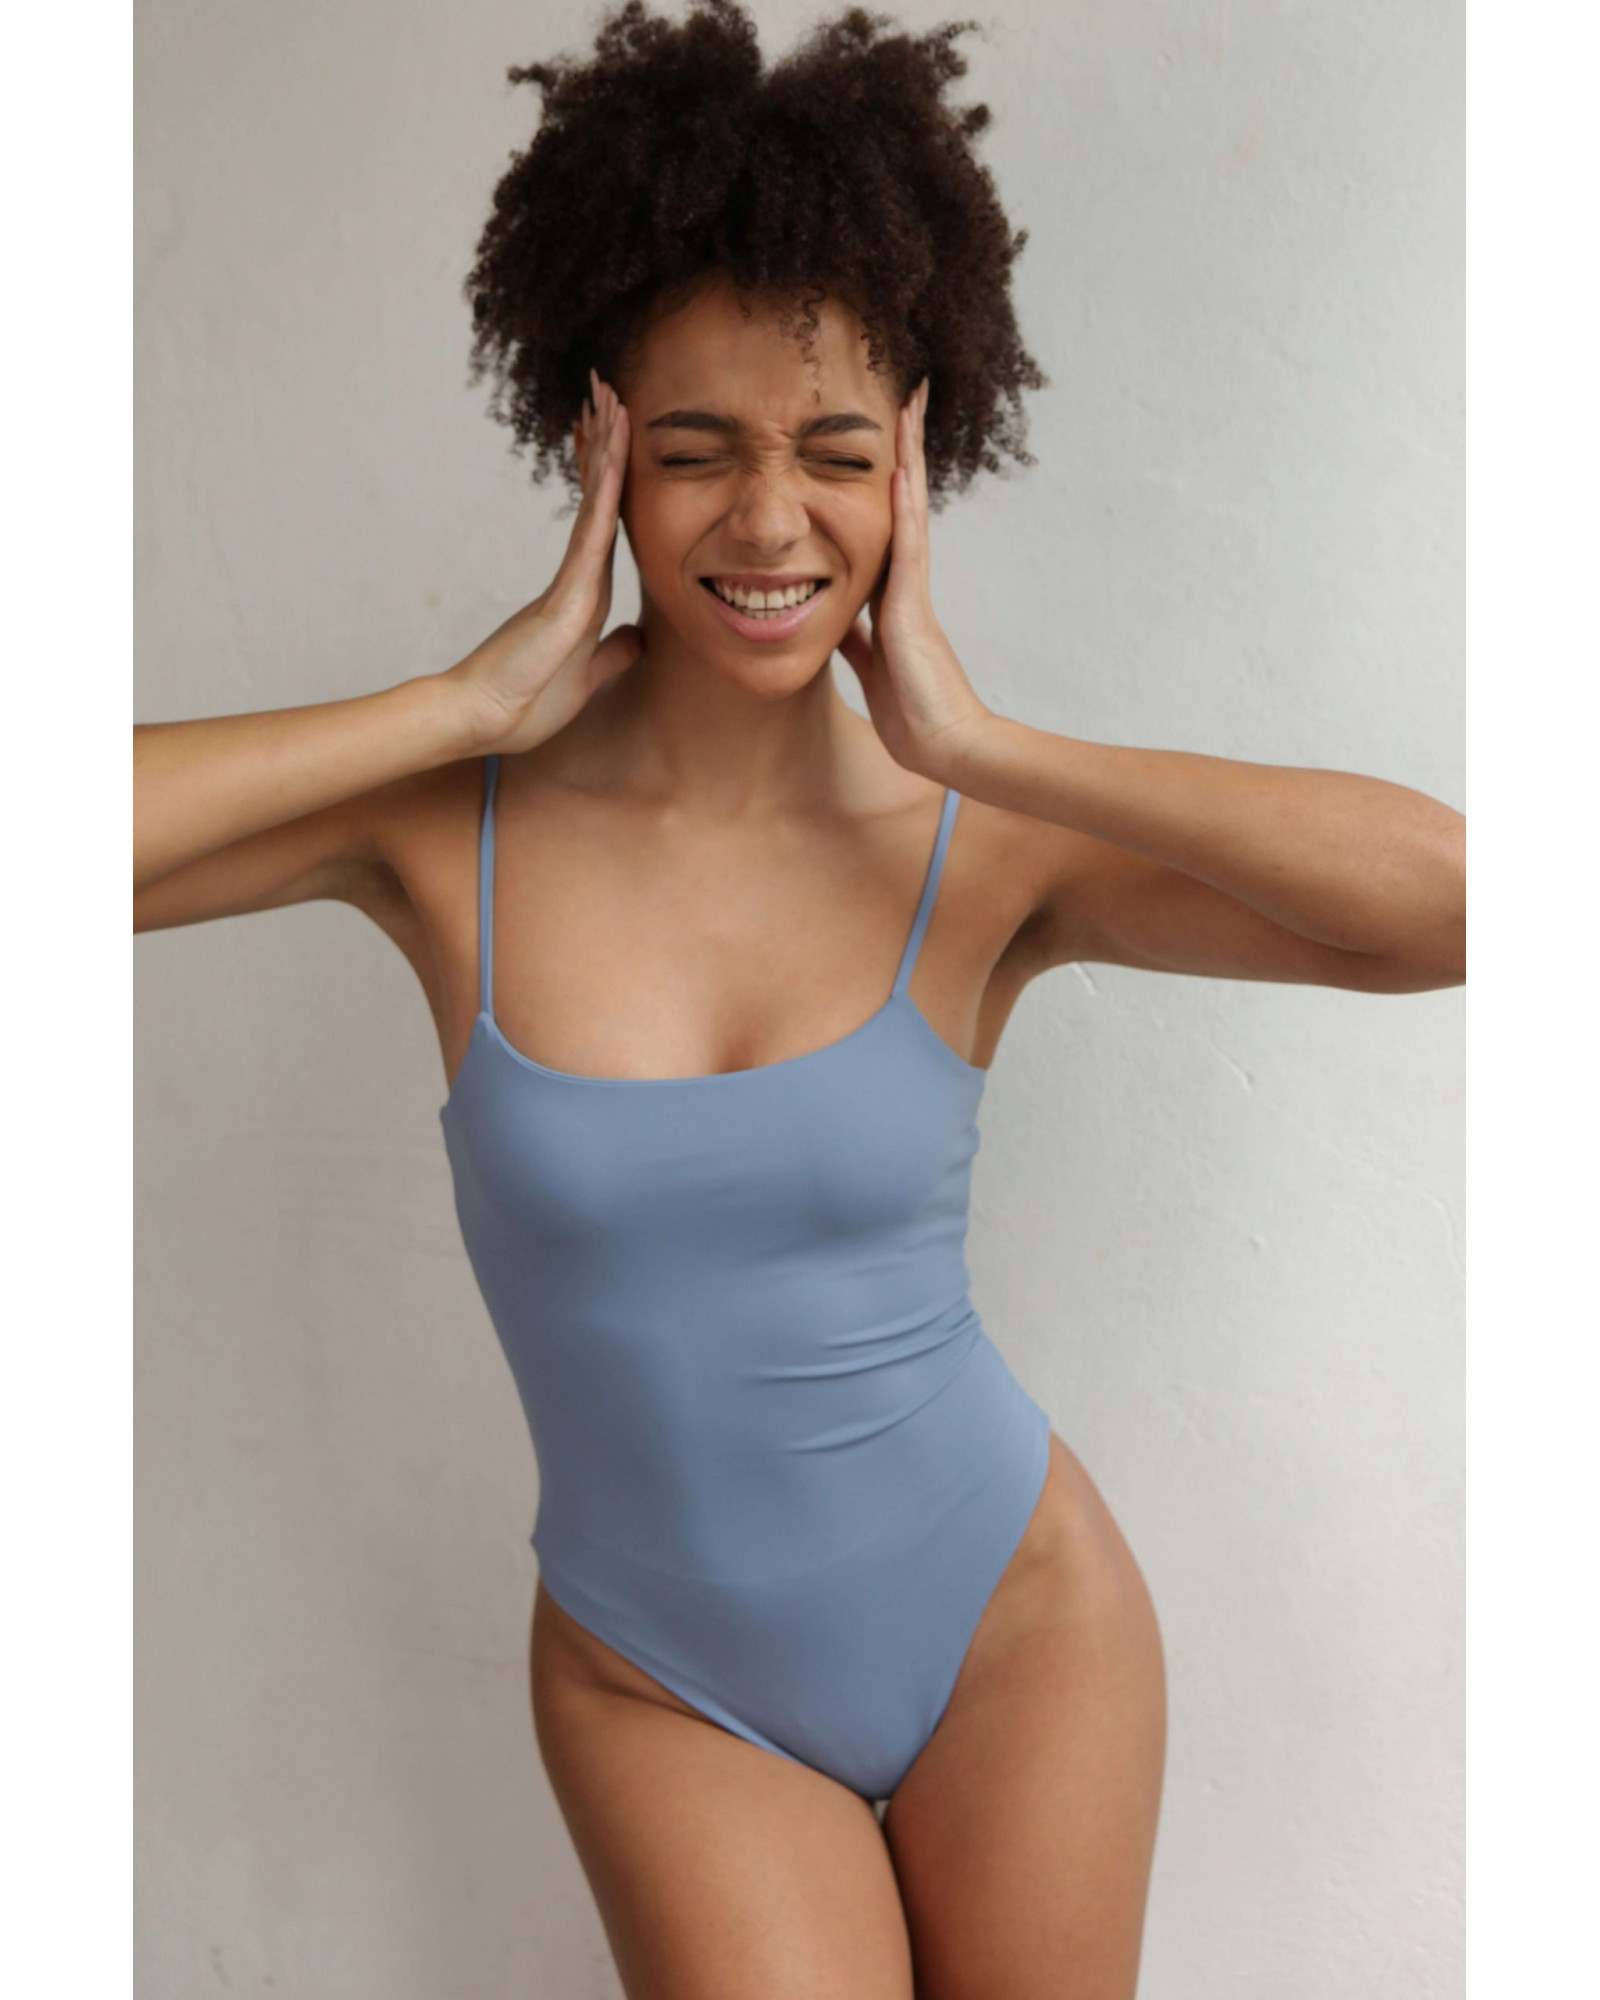 One-piece swimsuit female tenero Gray-Blue